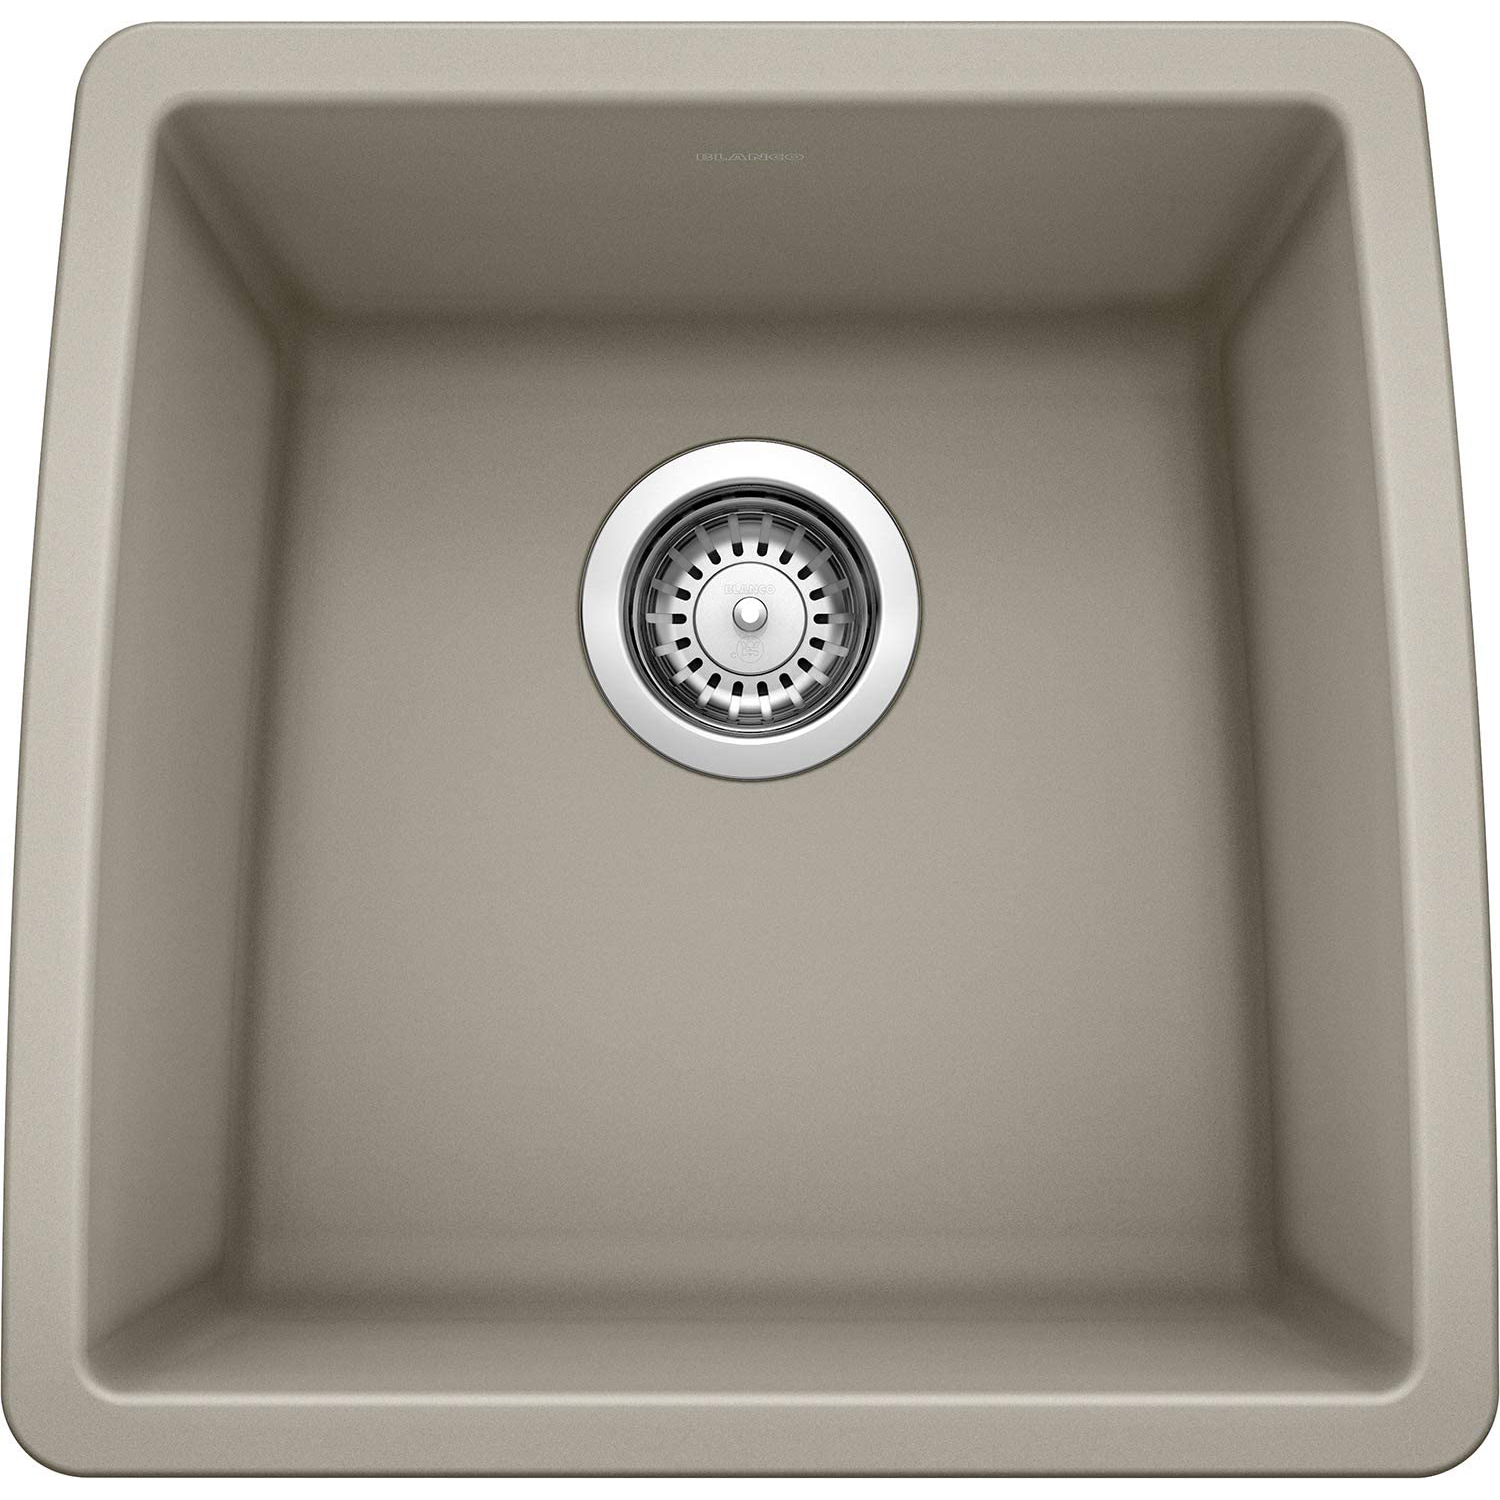 Performa 17-1/2x17x9" Single Bowl Bar Sink in Truffle